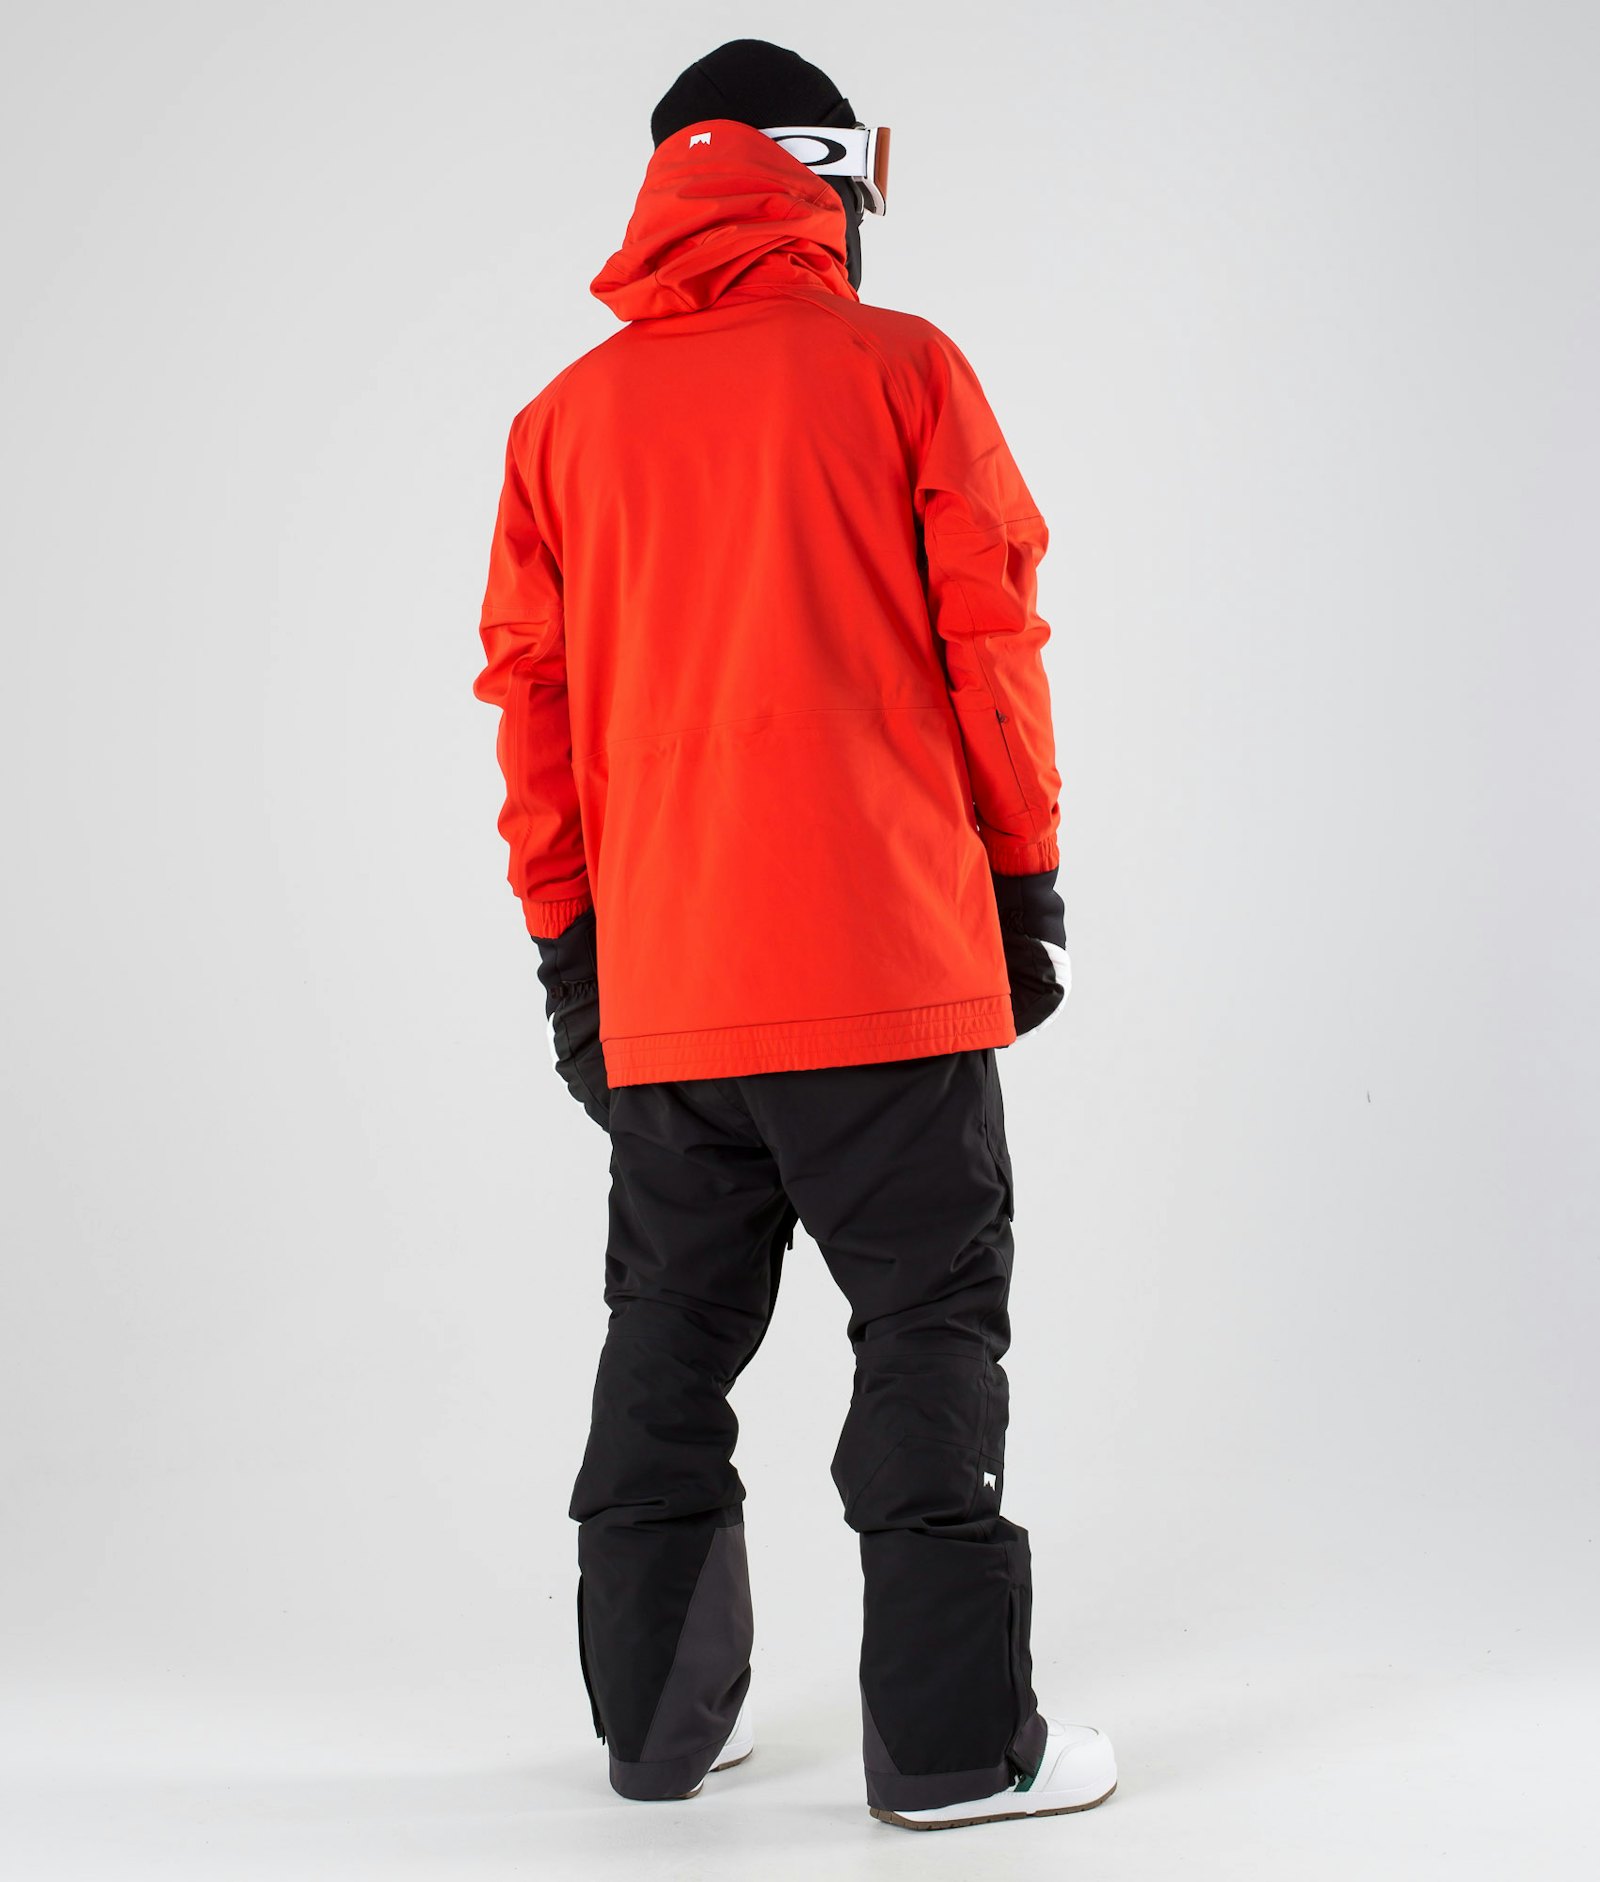 Tempest 2019 Snowboard Jacket Men Red